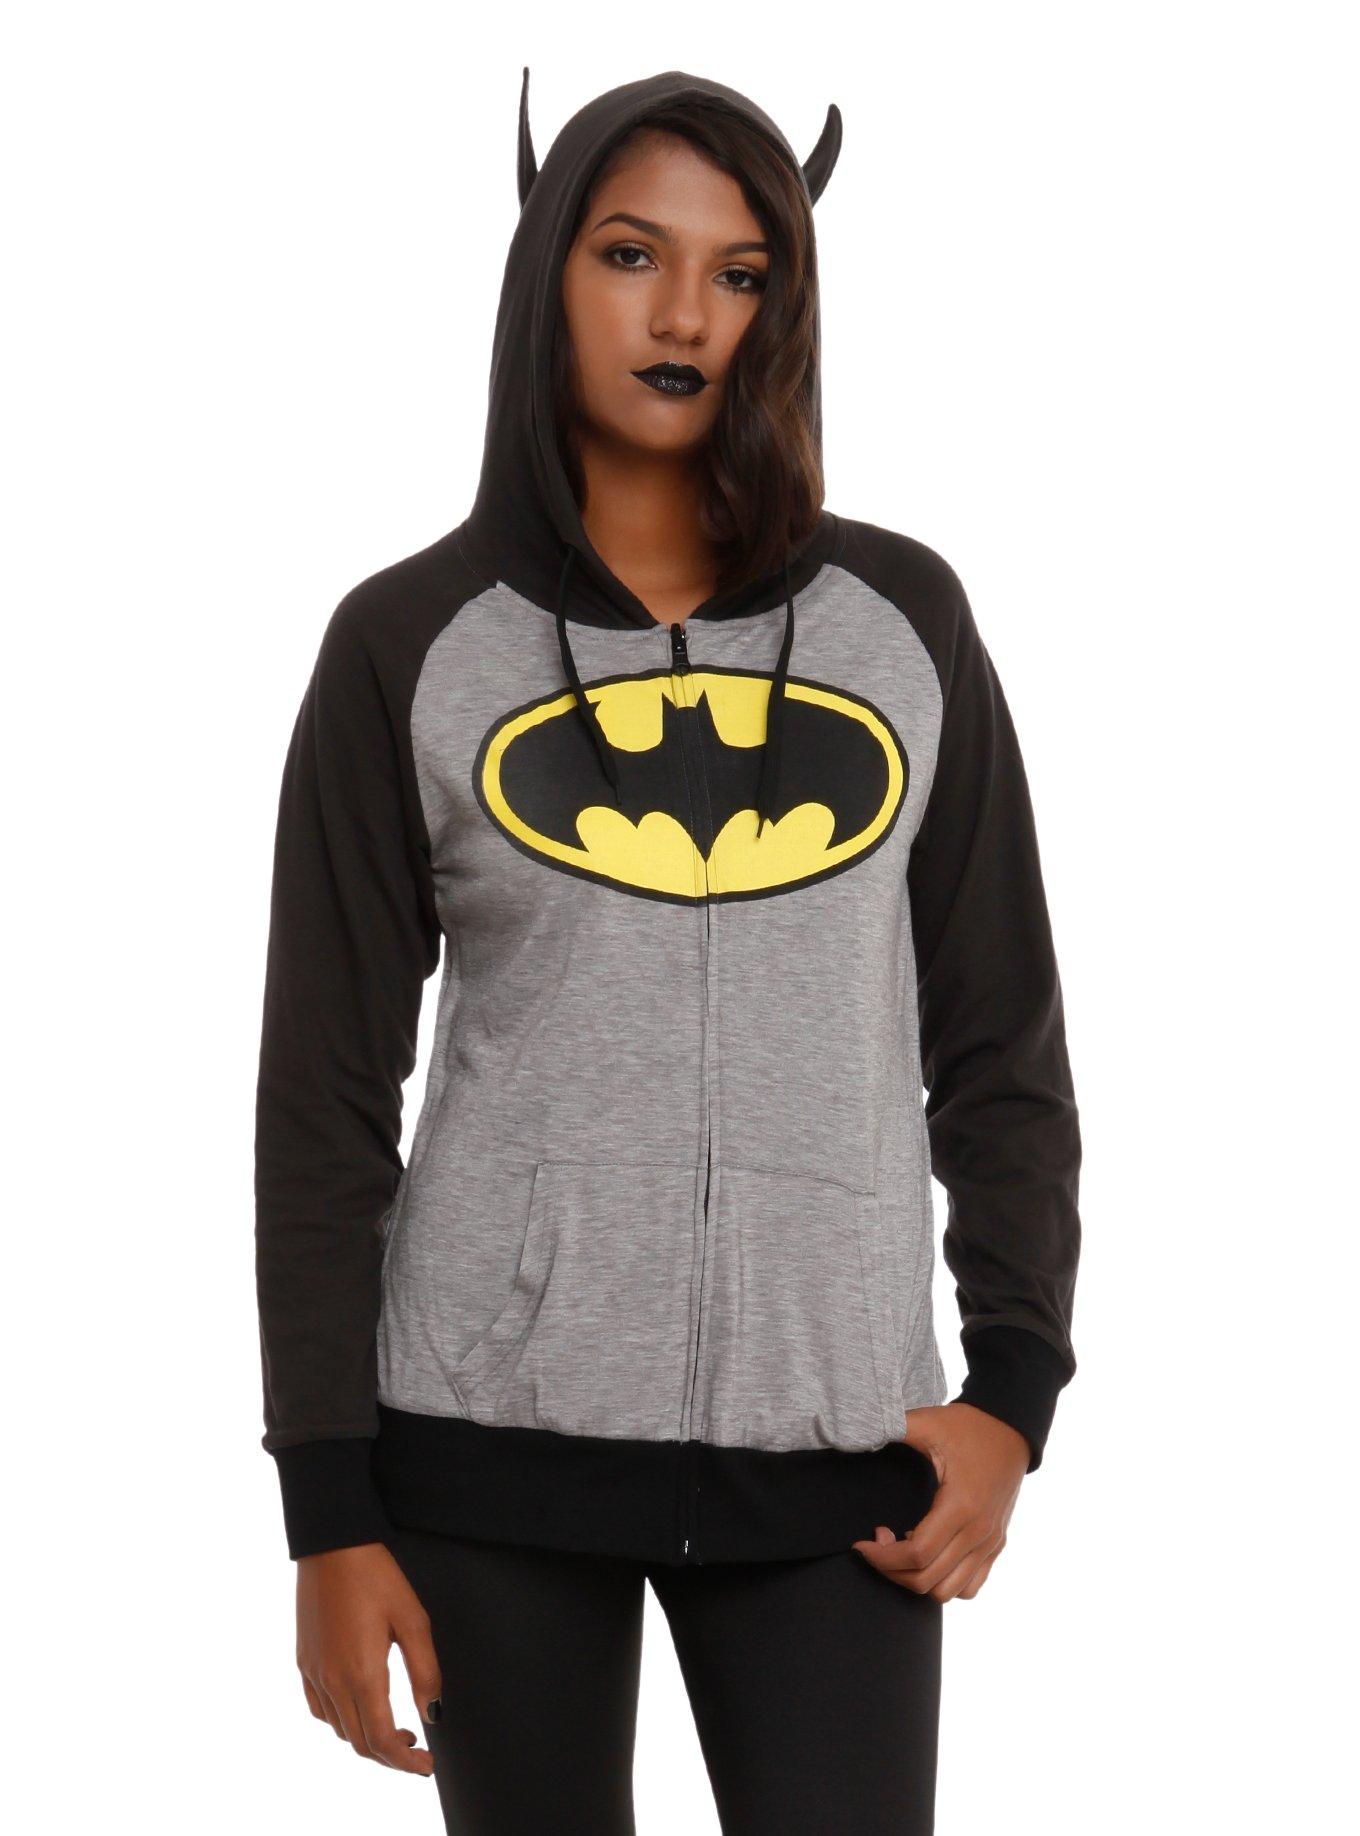 DC Comics Batman Reversible Girls Costume Hoodie 2XL | Hot Topic